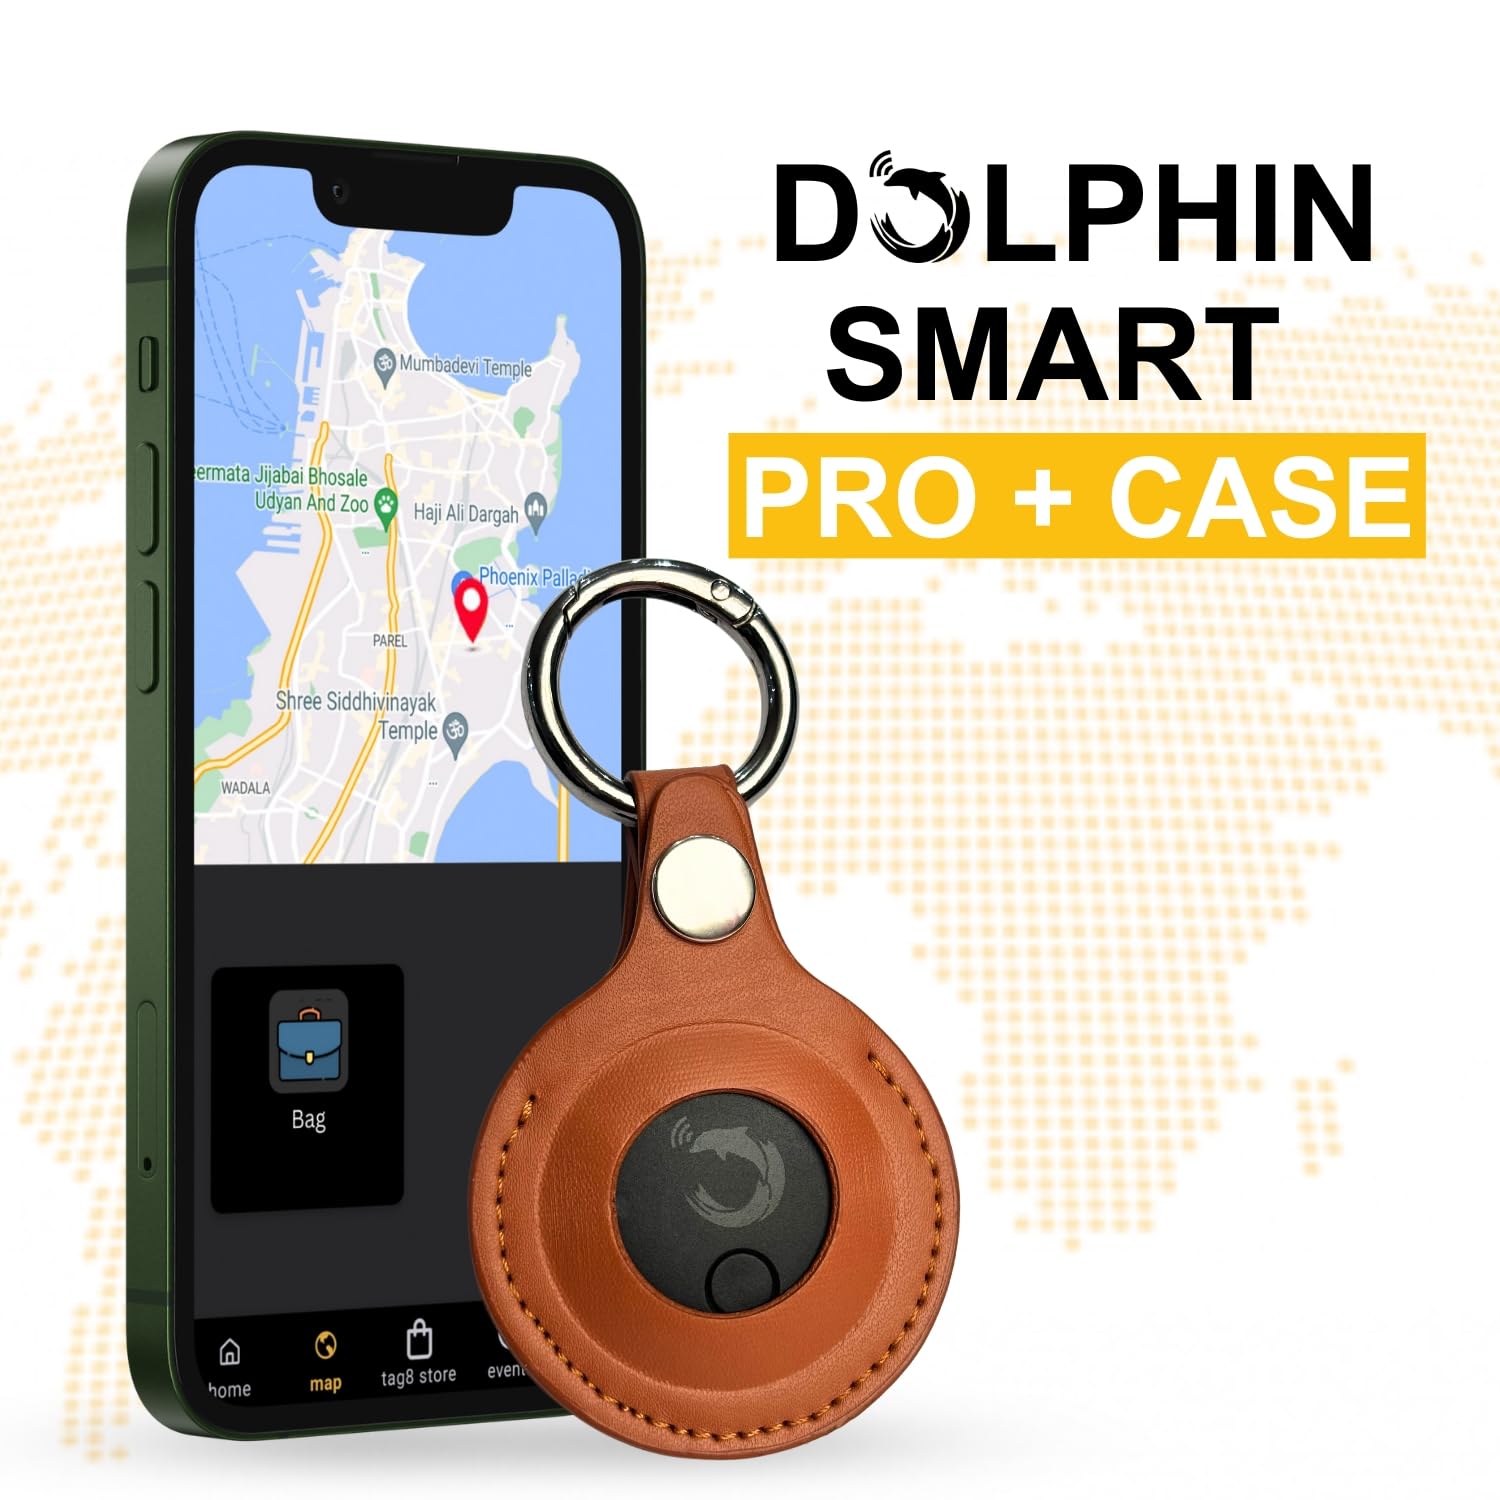 Dolphin Smart Tracker Pro Case